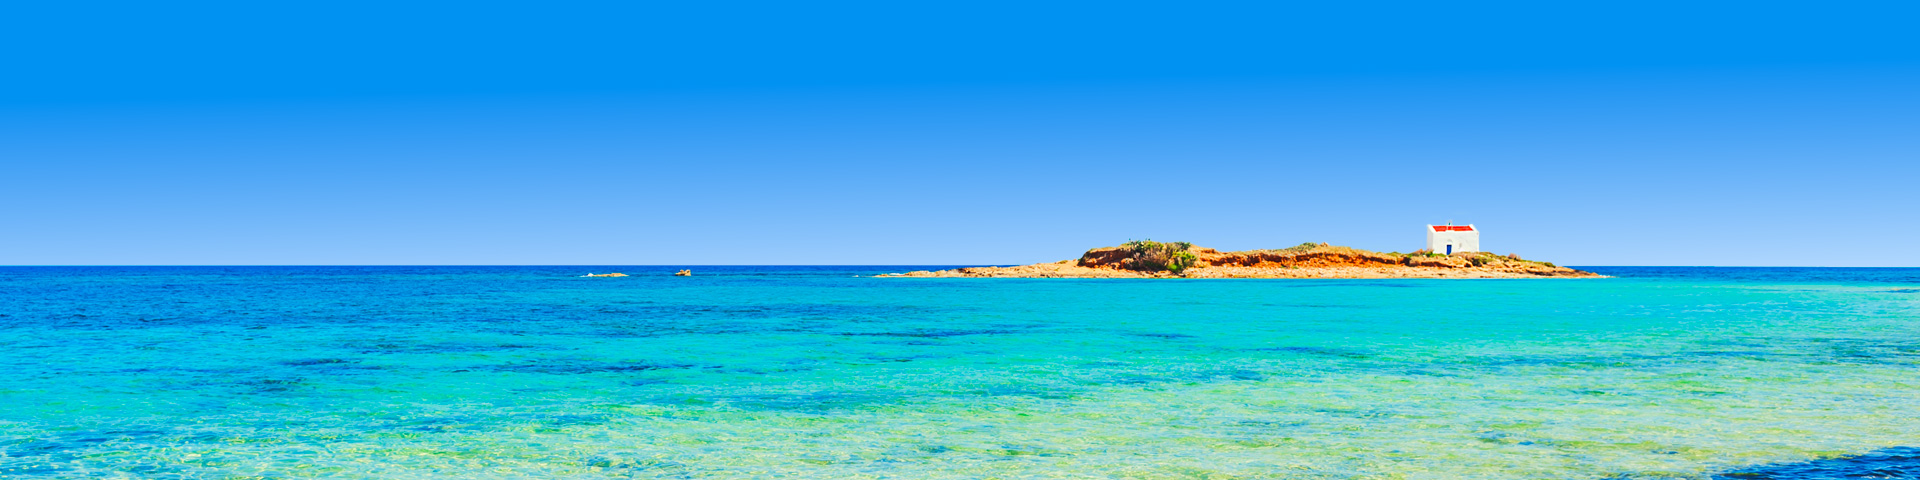 Azuurblauwe zee met eilandje en huisje bij Malia Kreta